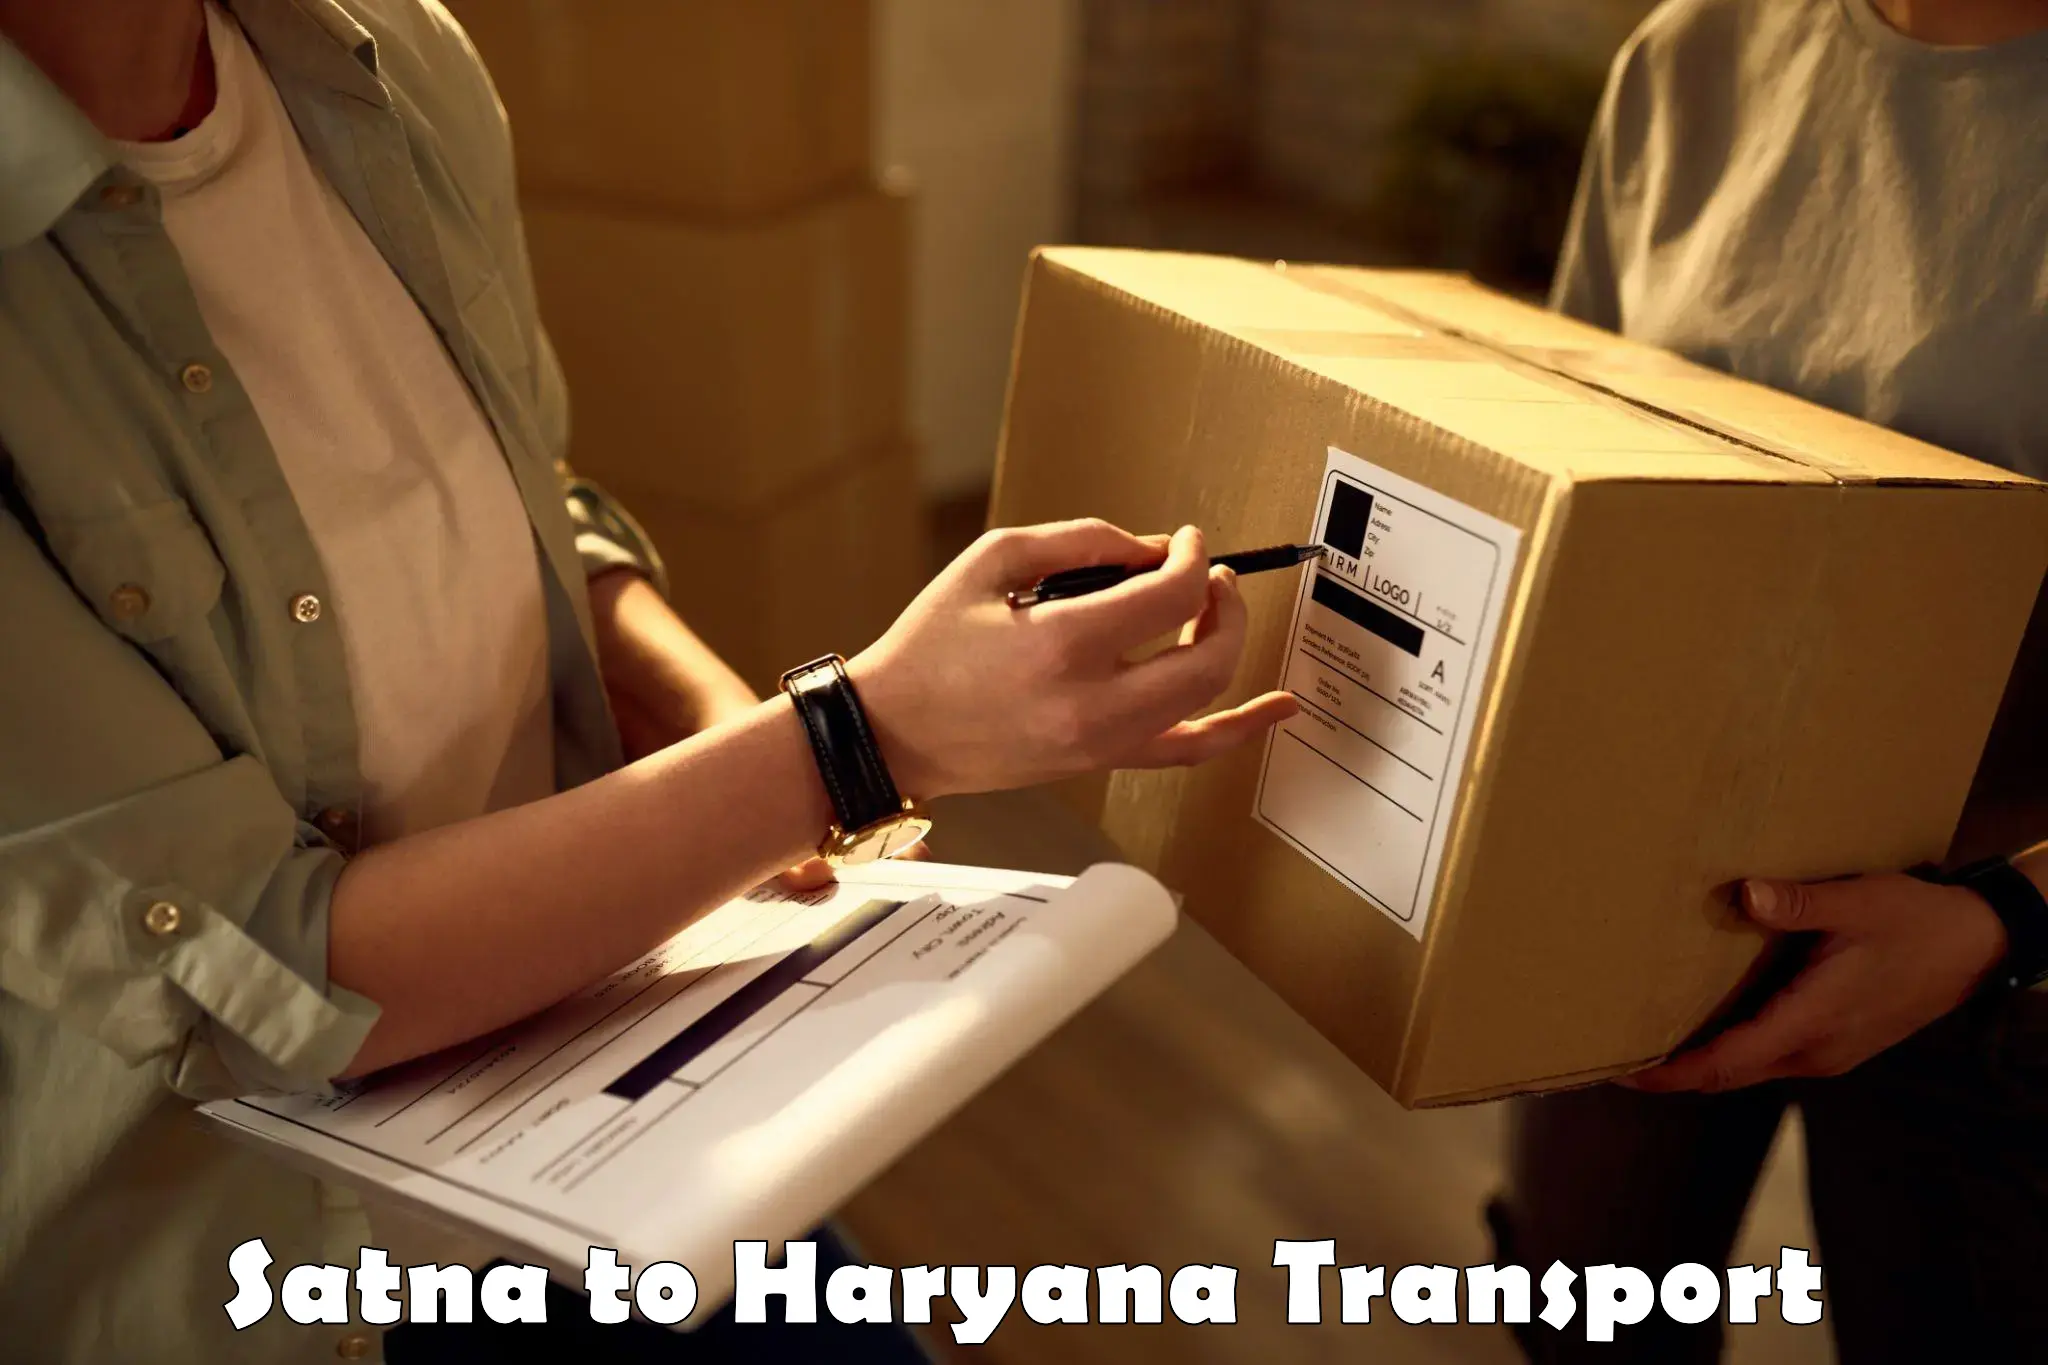 Transport shared services Satna to Bilaspur Haryana